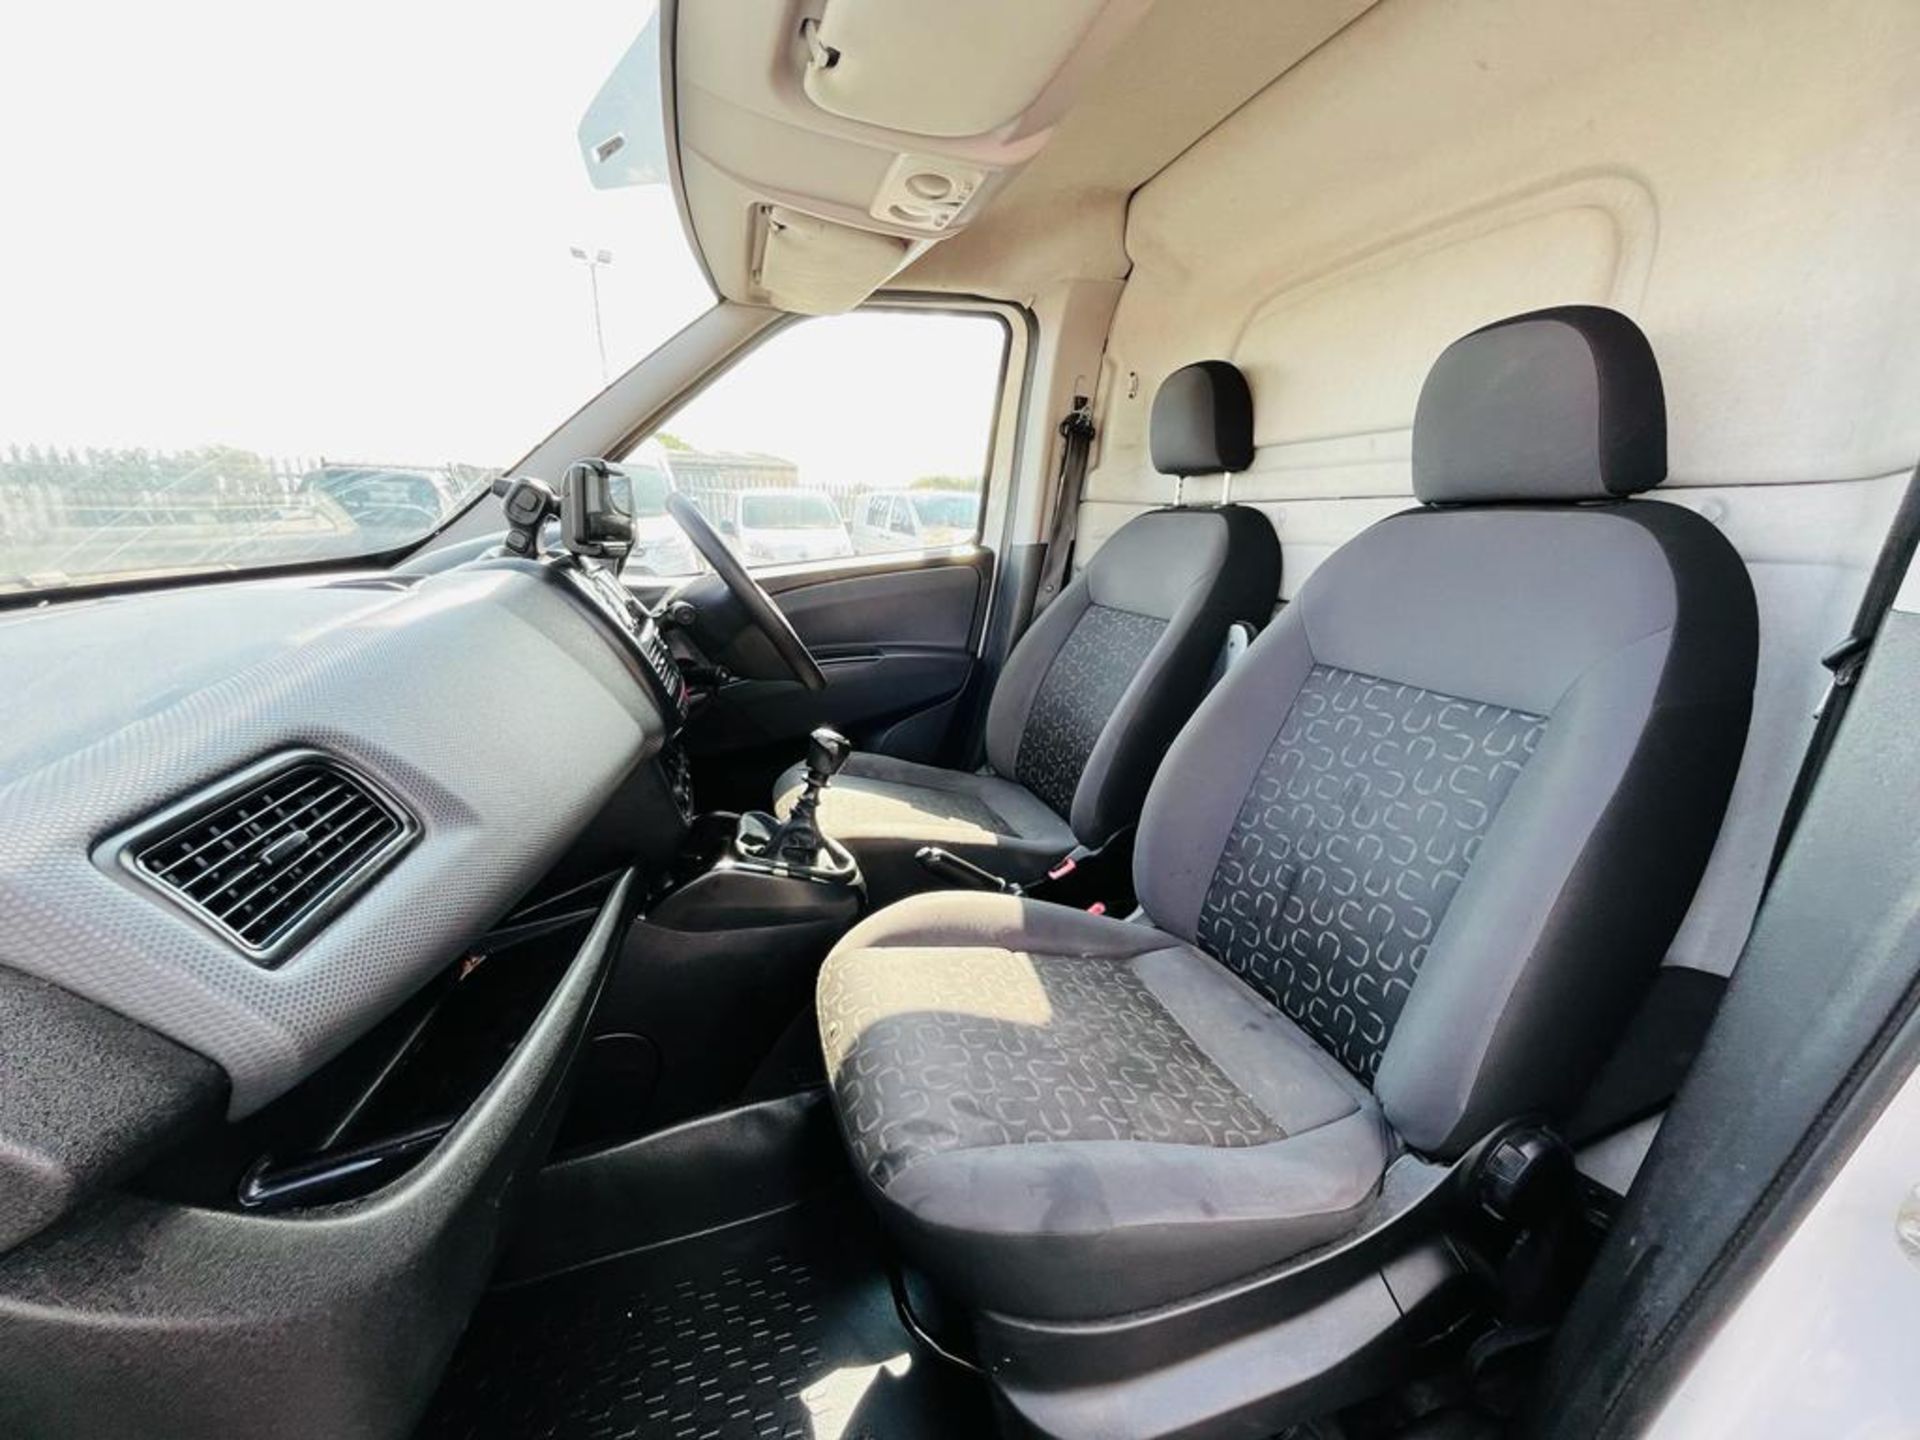 Fiat Doblo Cargo 1.6 MultiJet Tecnico MAXI 2019 '19 Reg' Only 85,456 Miles - ULEZ Compliant - Image 23 of 25